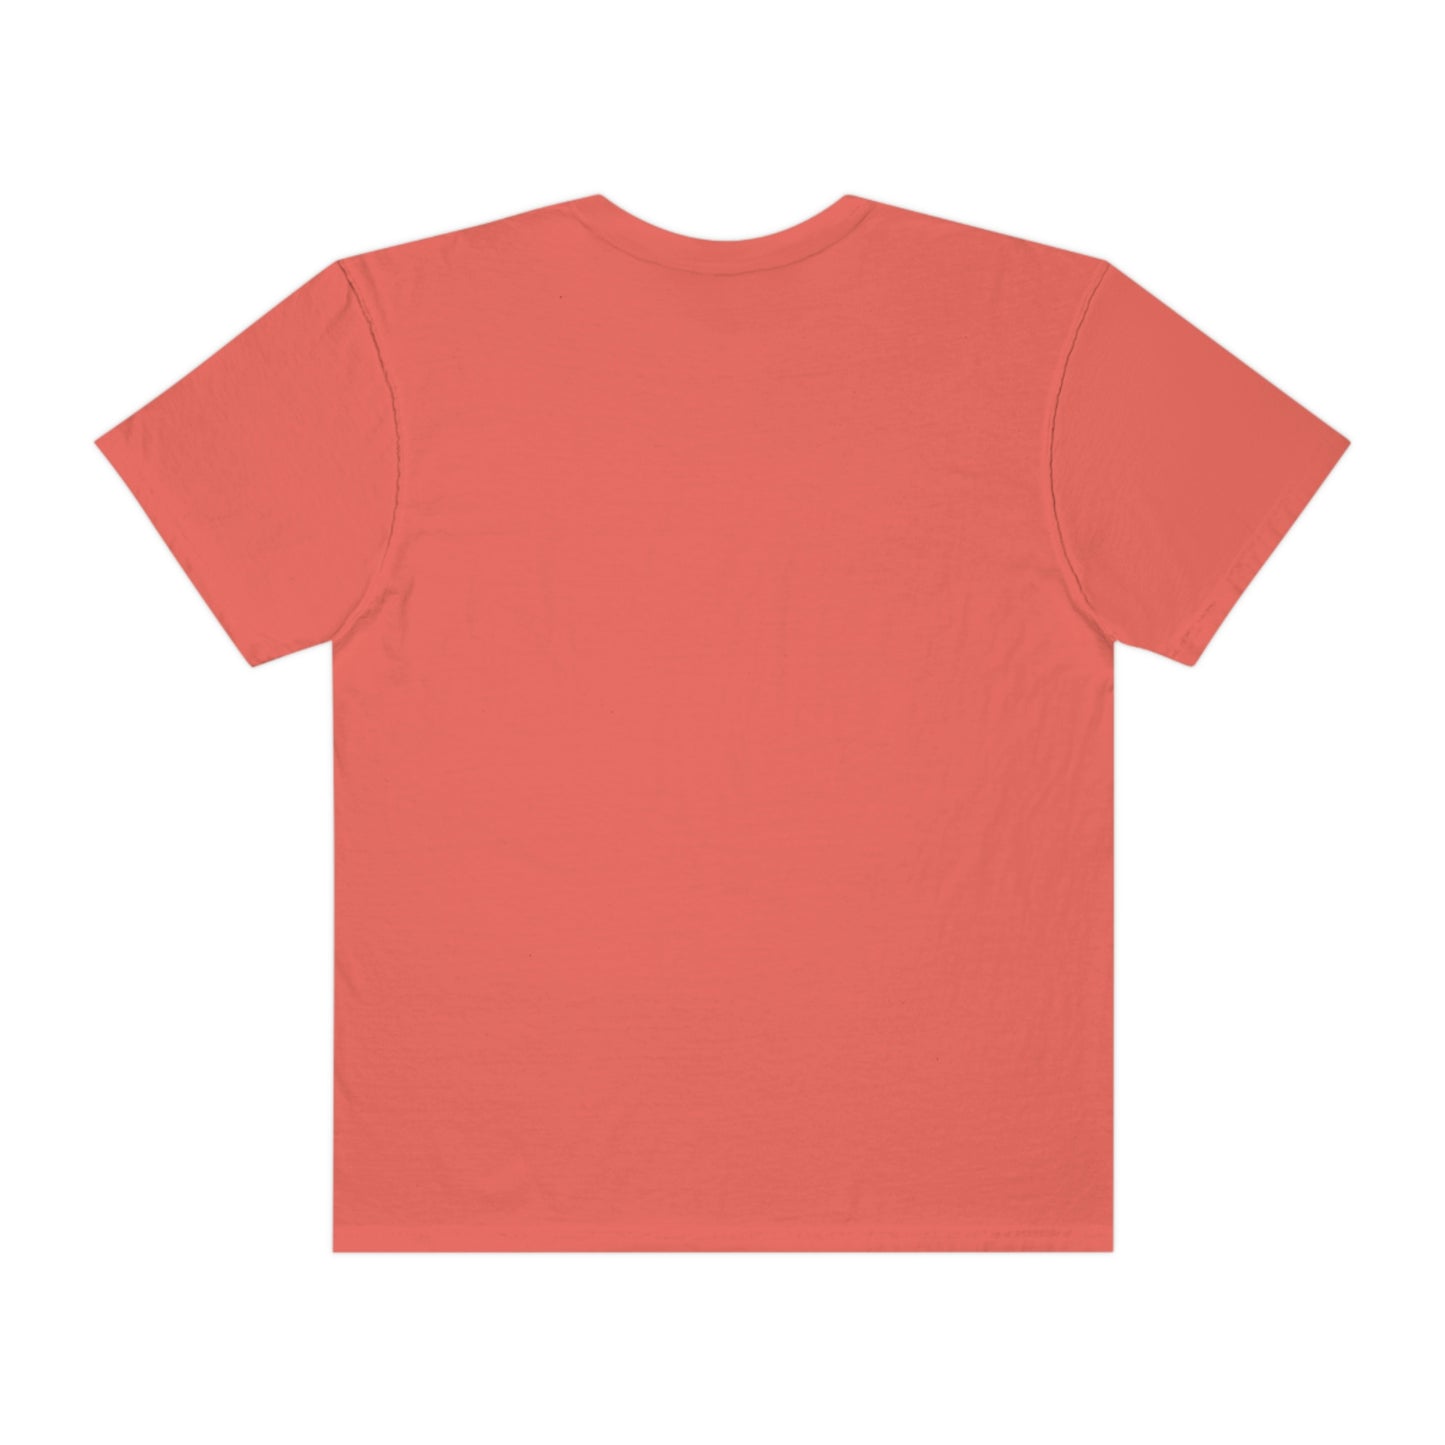 Emerson_“Leave a trail“-Unisex Garment-Dyed T-shirt